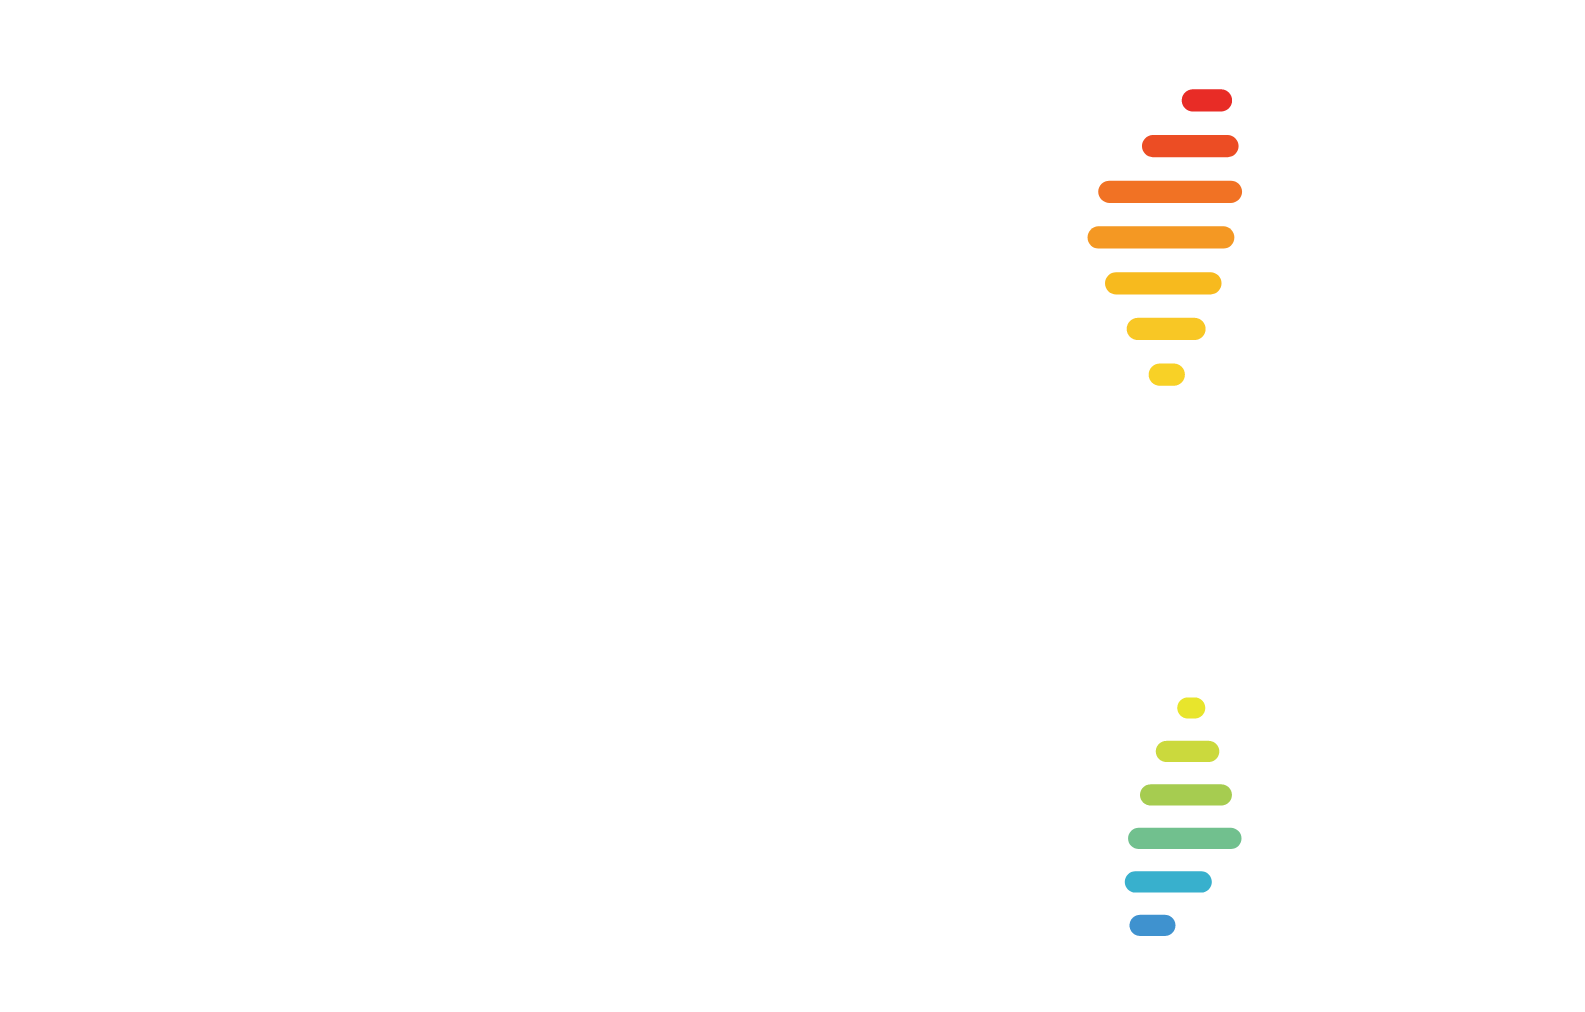 IDEAYA Biosciences logo large for dark backgrounds (transparent PNG)